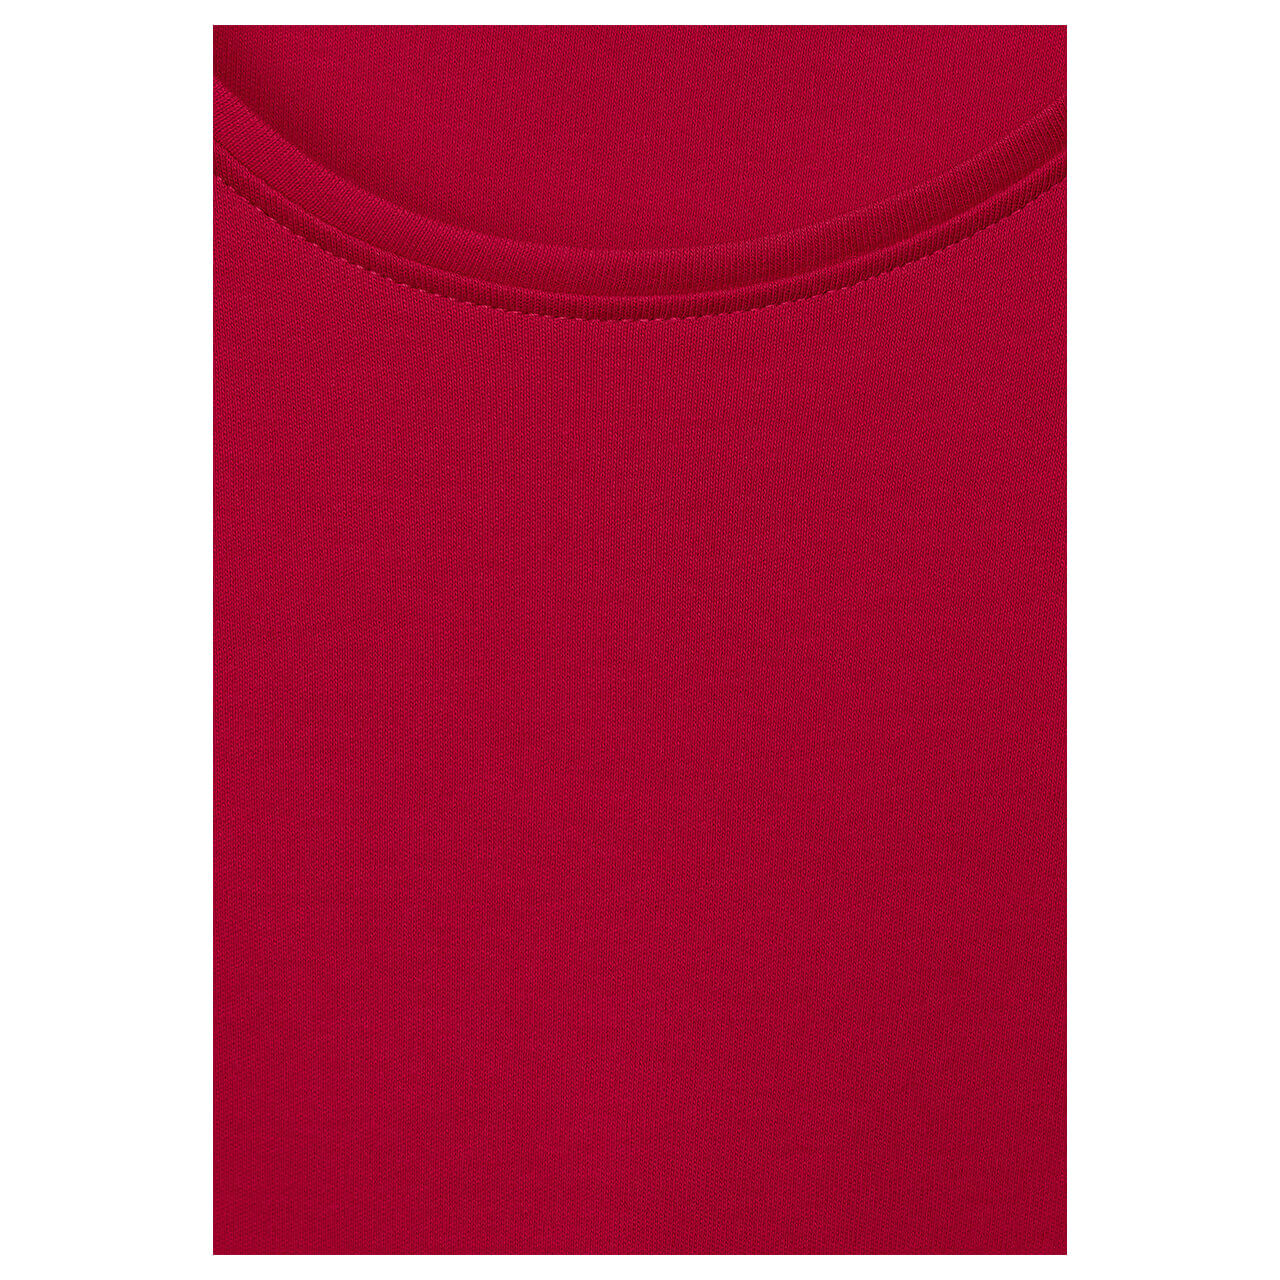 Cecil Damen Langarm Shirt Pia casual red